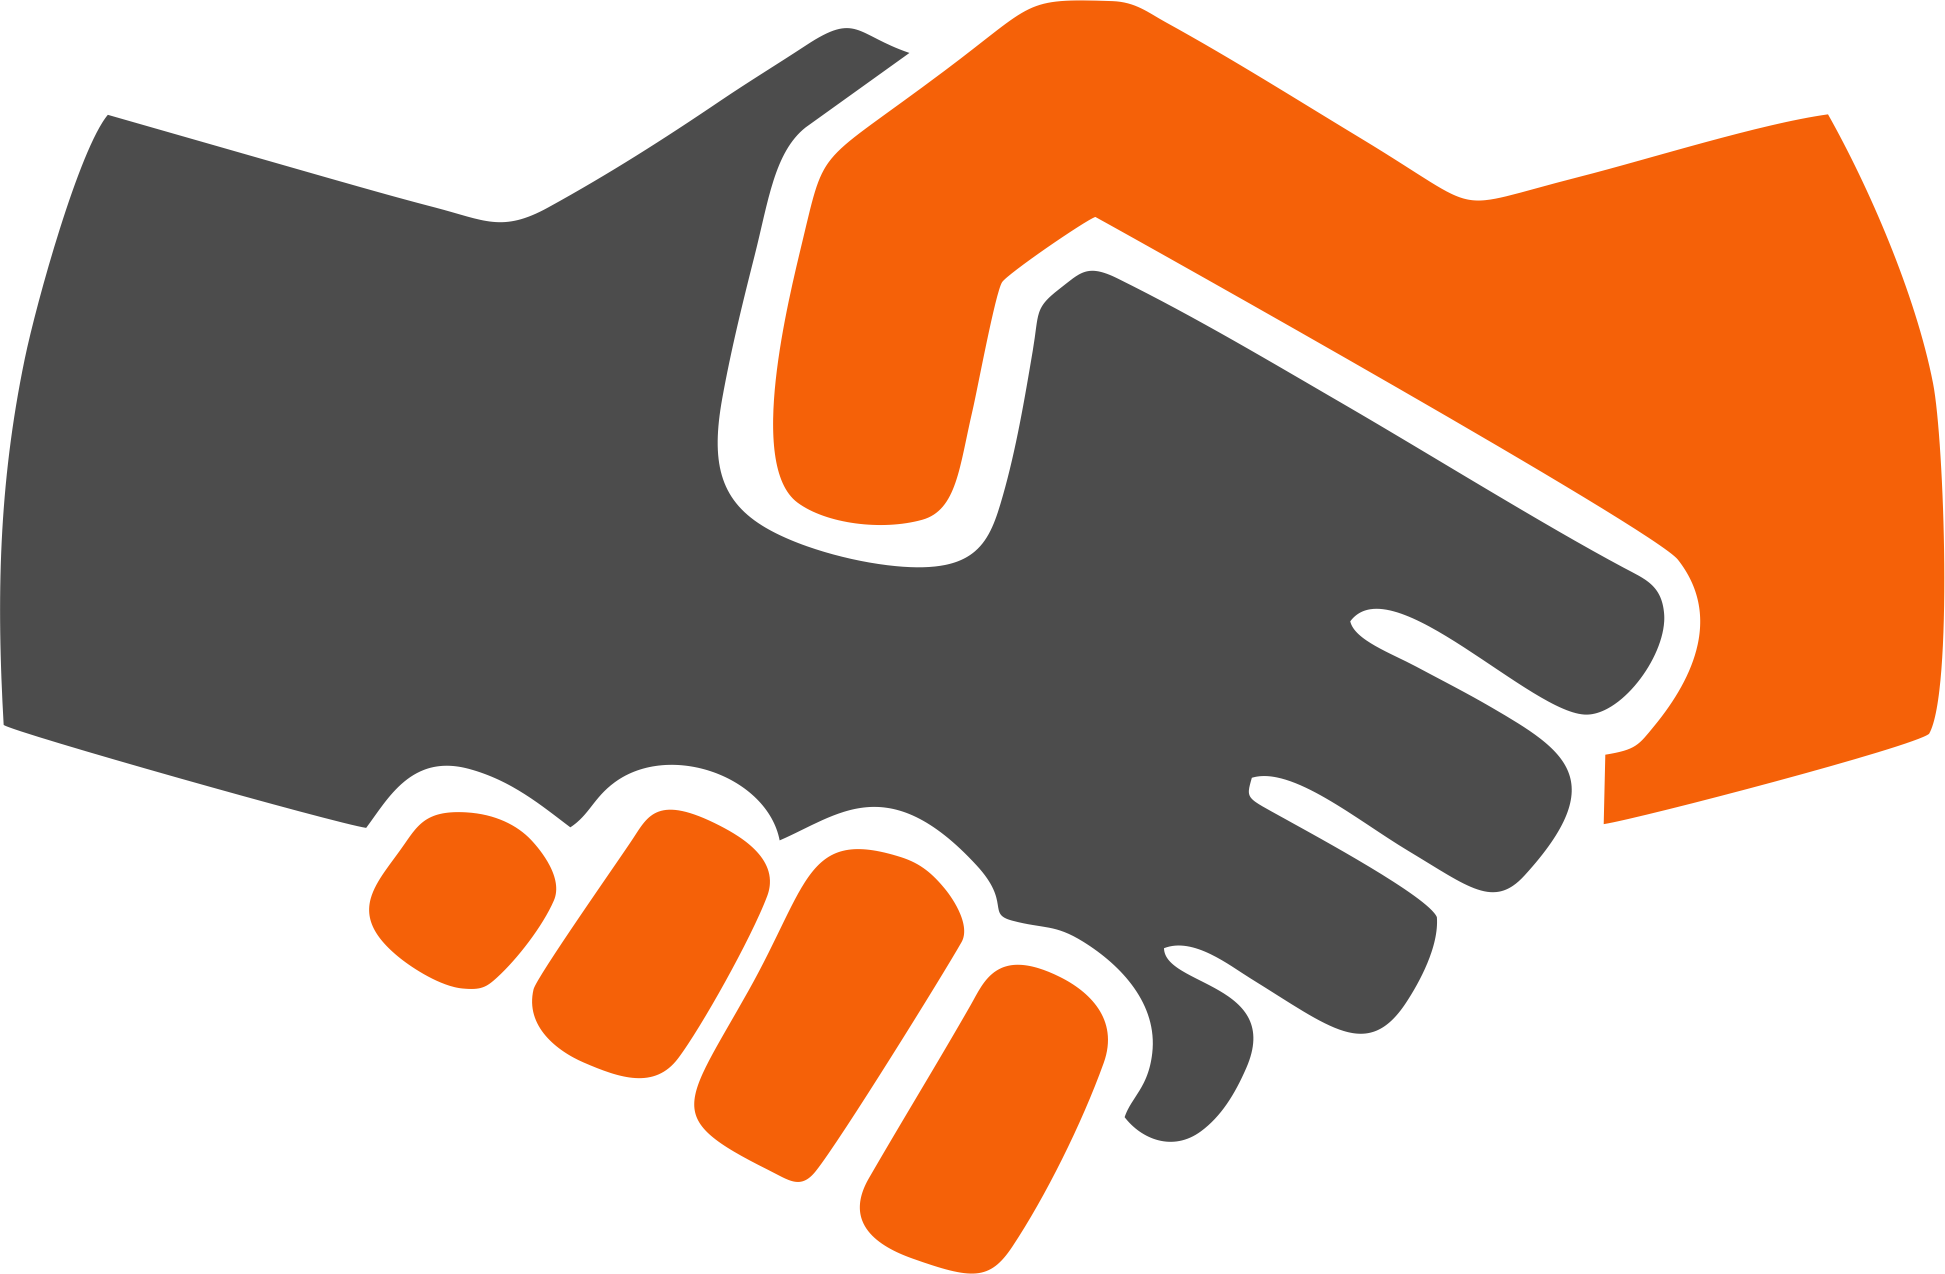 Handshake Partnership Agreement PNG